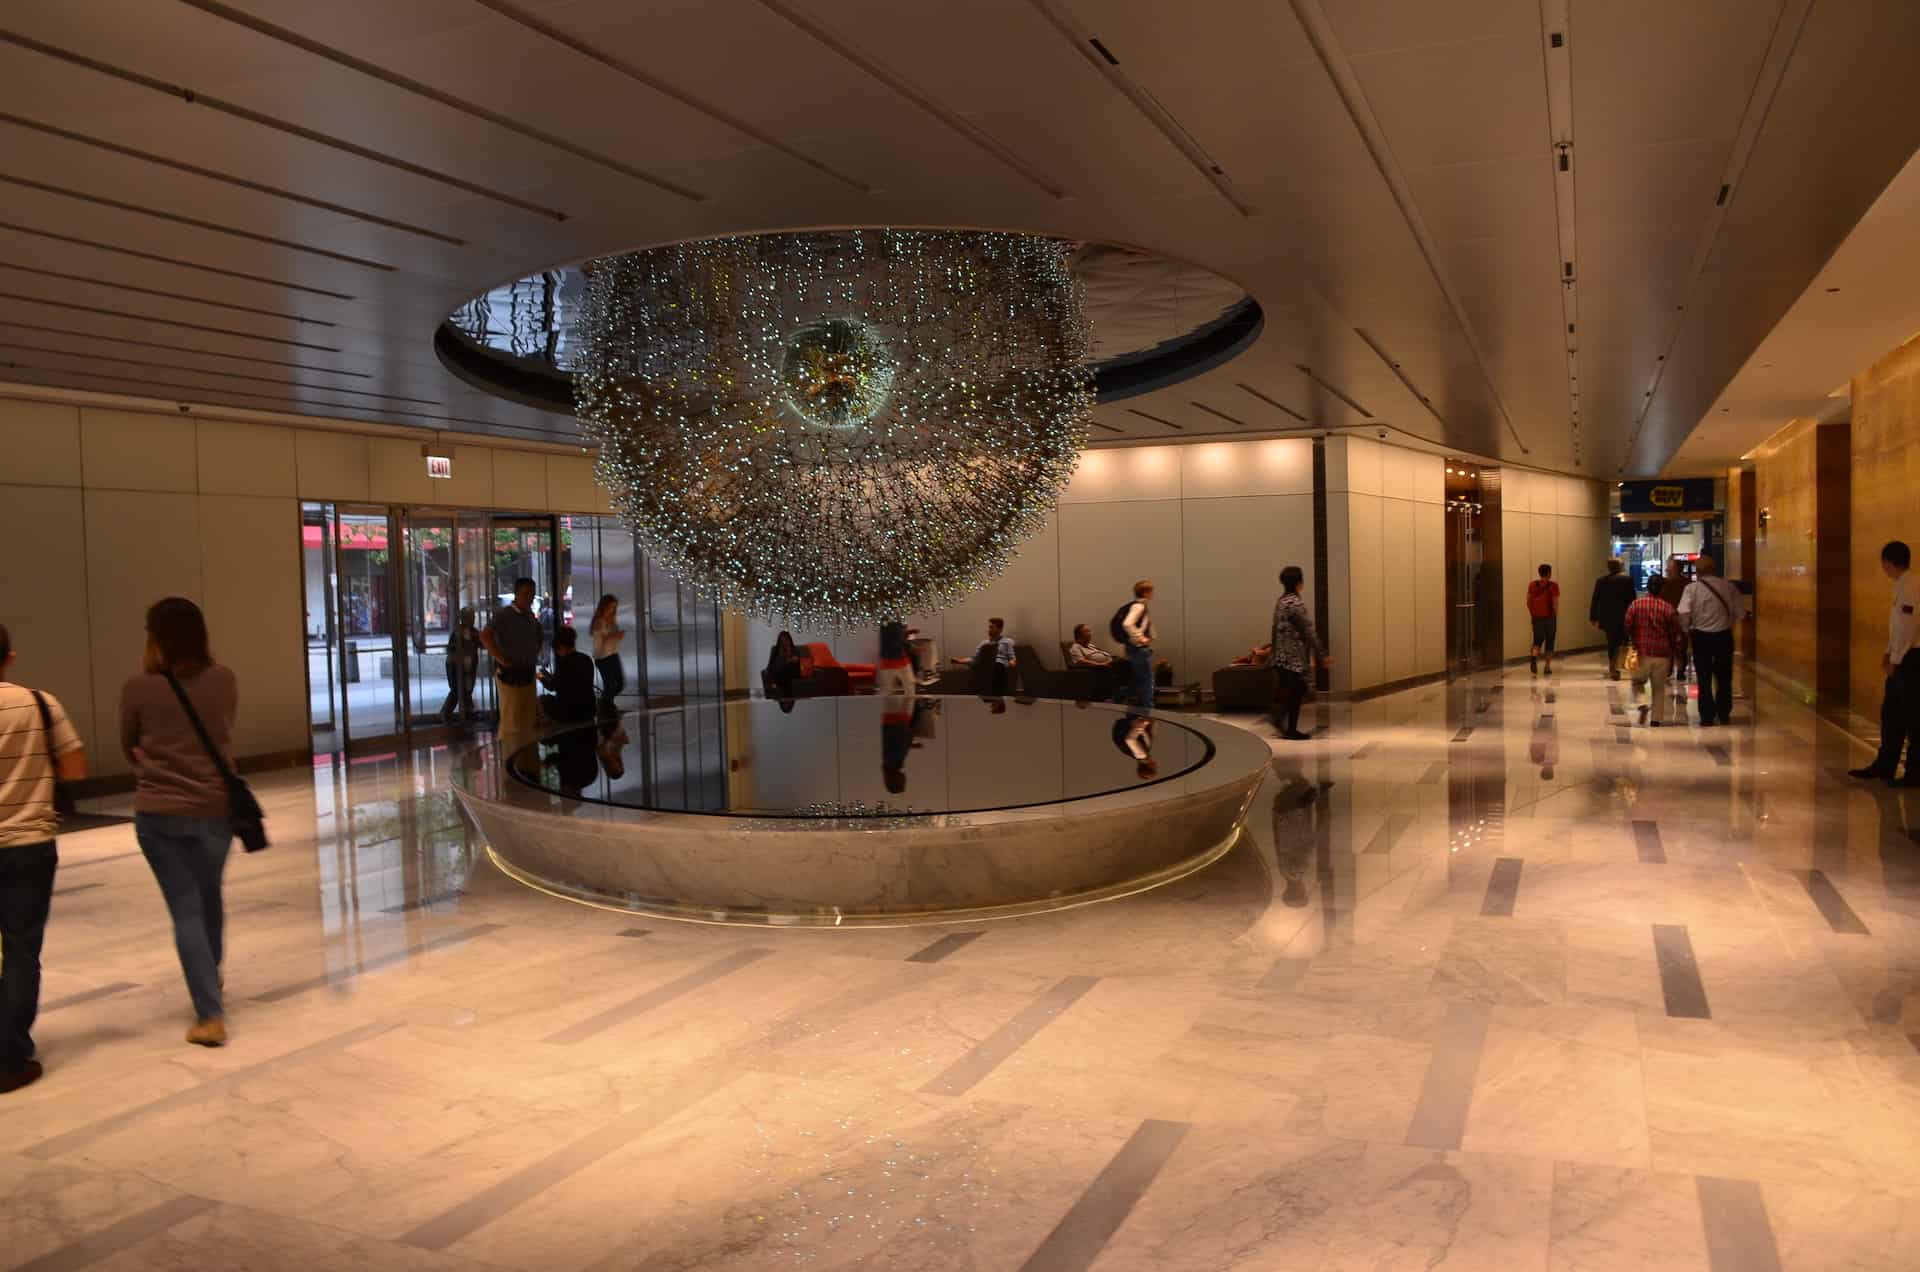 Lobby at the John Hancock Center in Chicago, Illinois